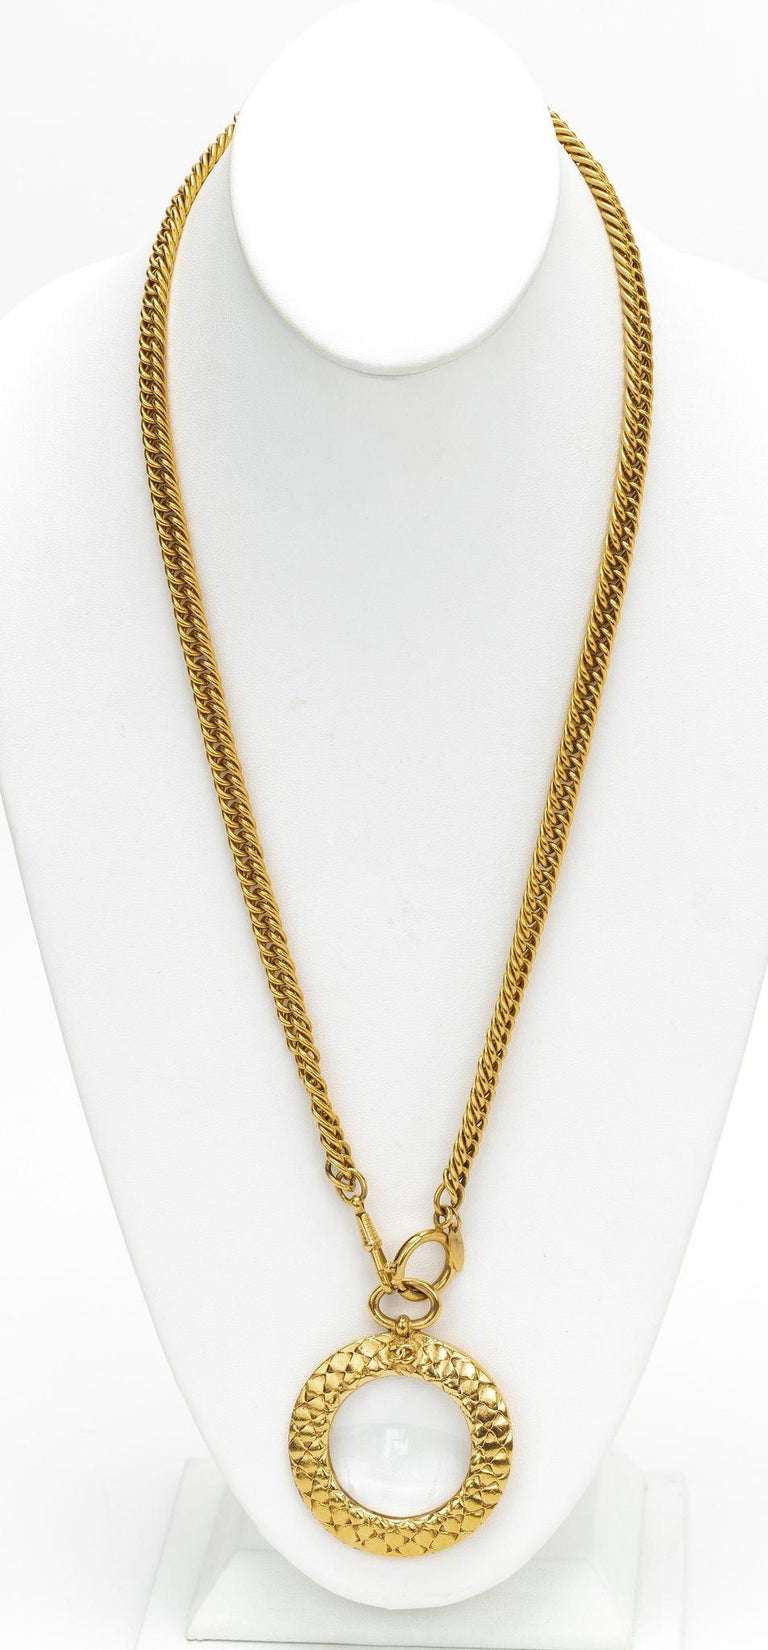 Chanel 1980s Gold Loupe Eyeglass Pendant Necklace